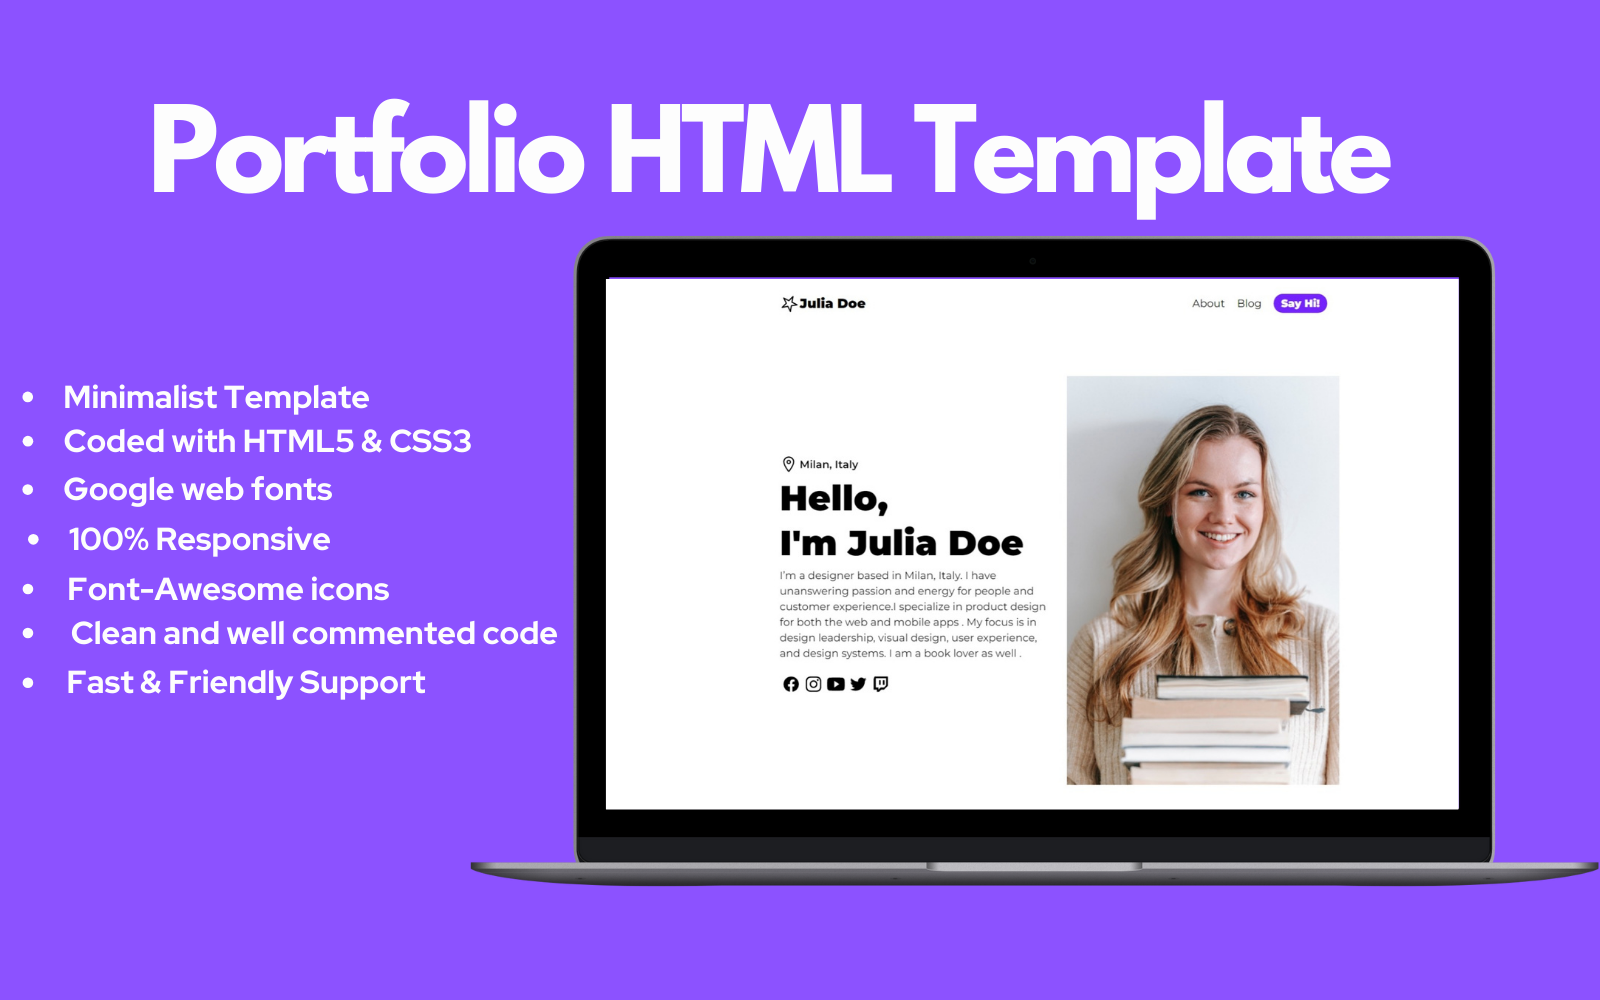 Bosluk Personal Portfolio One Page HTML5 Template